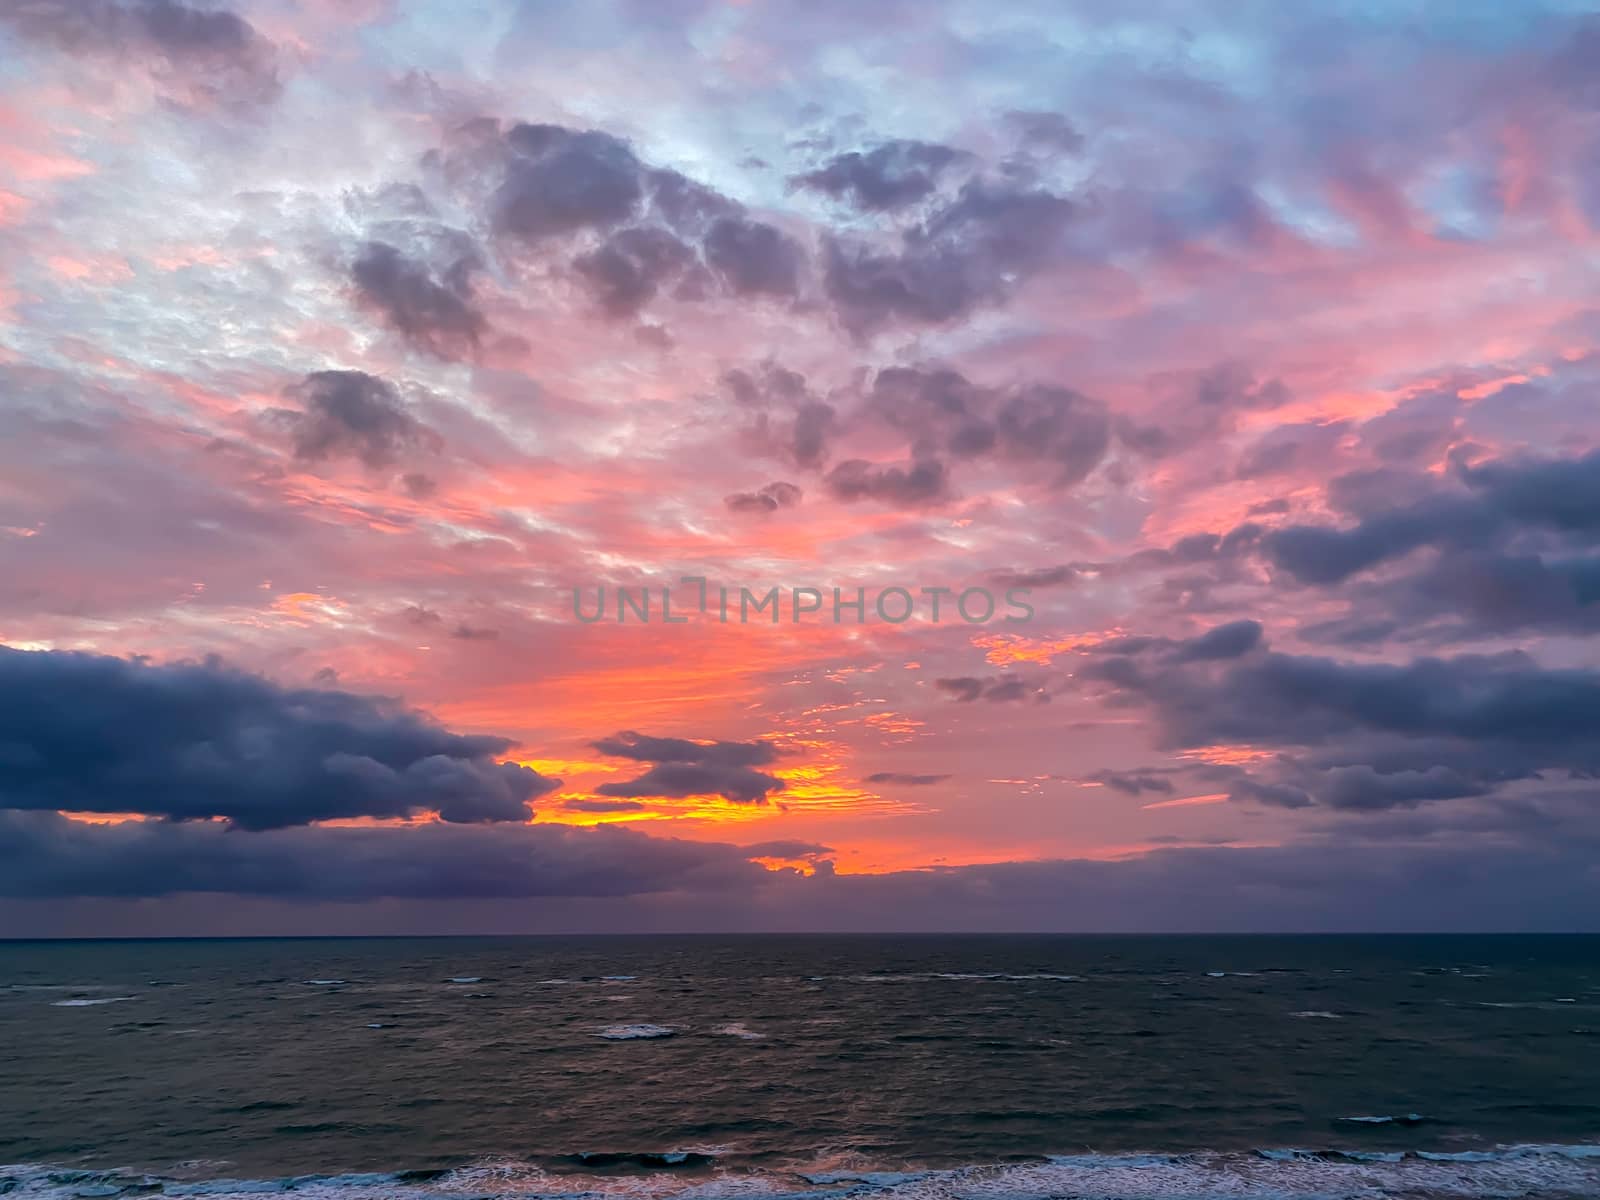 A vibrant sunrise over the Atlantic Ocean on North Hutchinson Island in Florida.